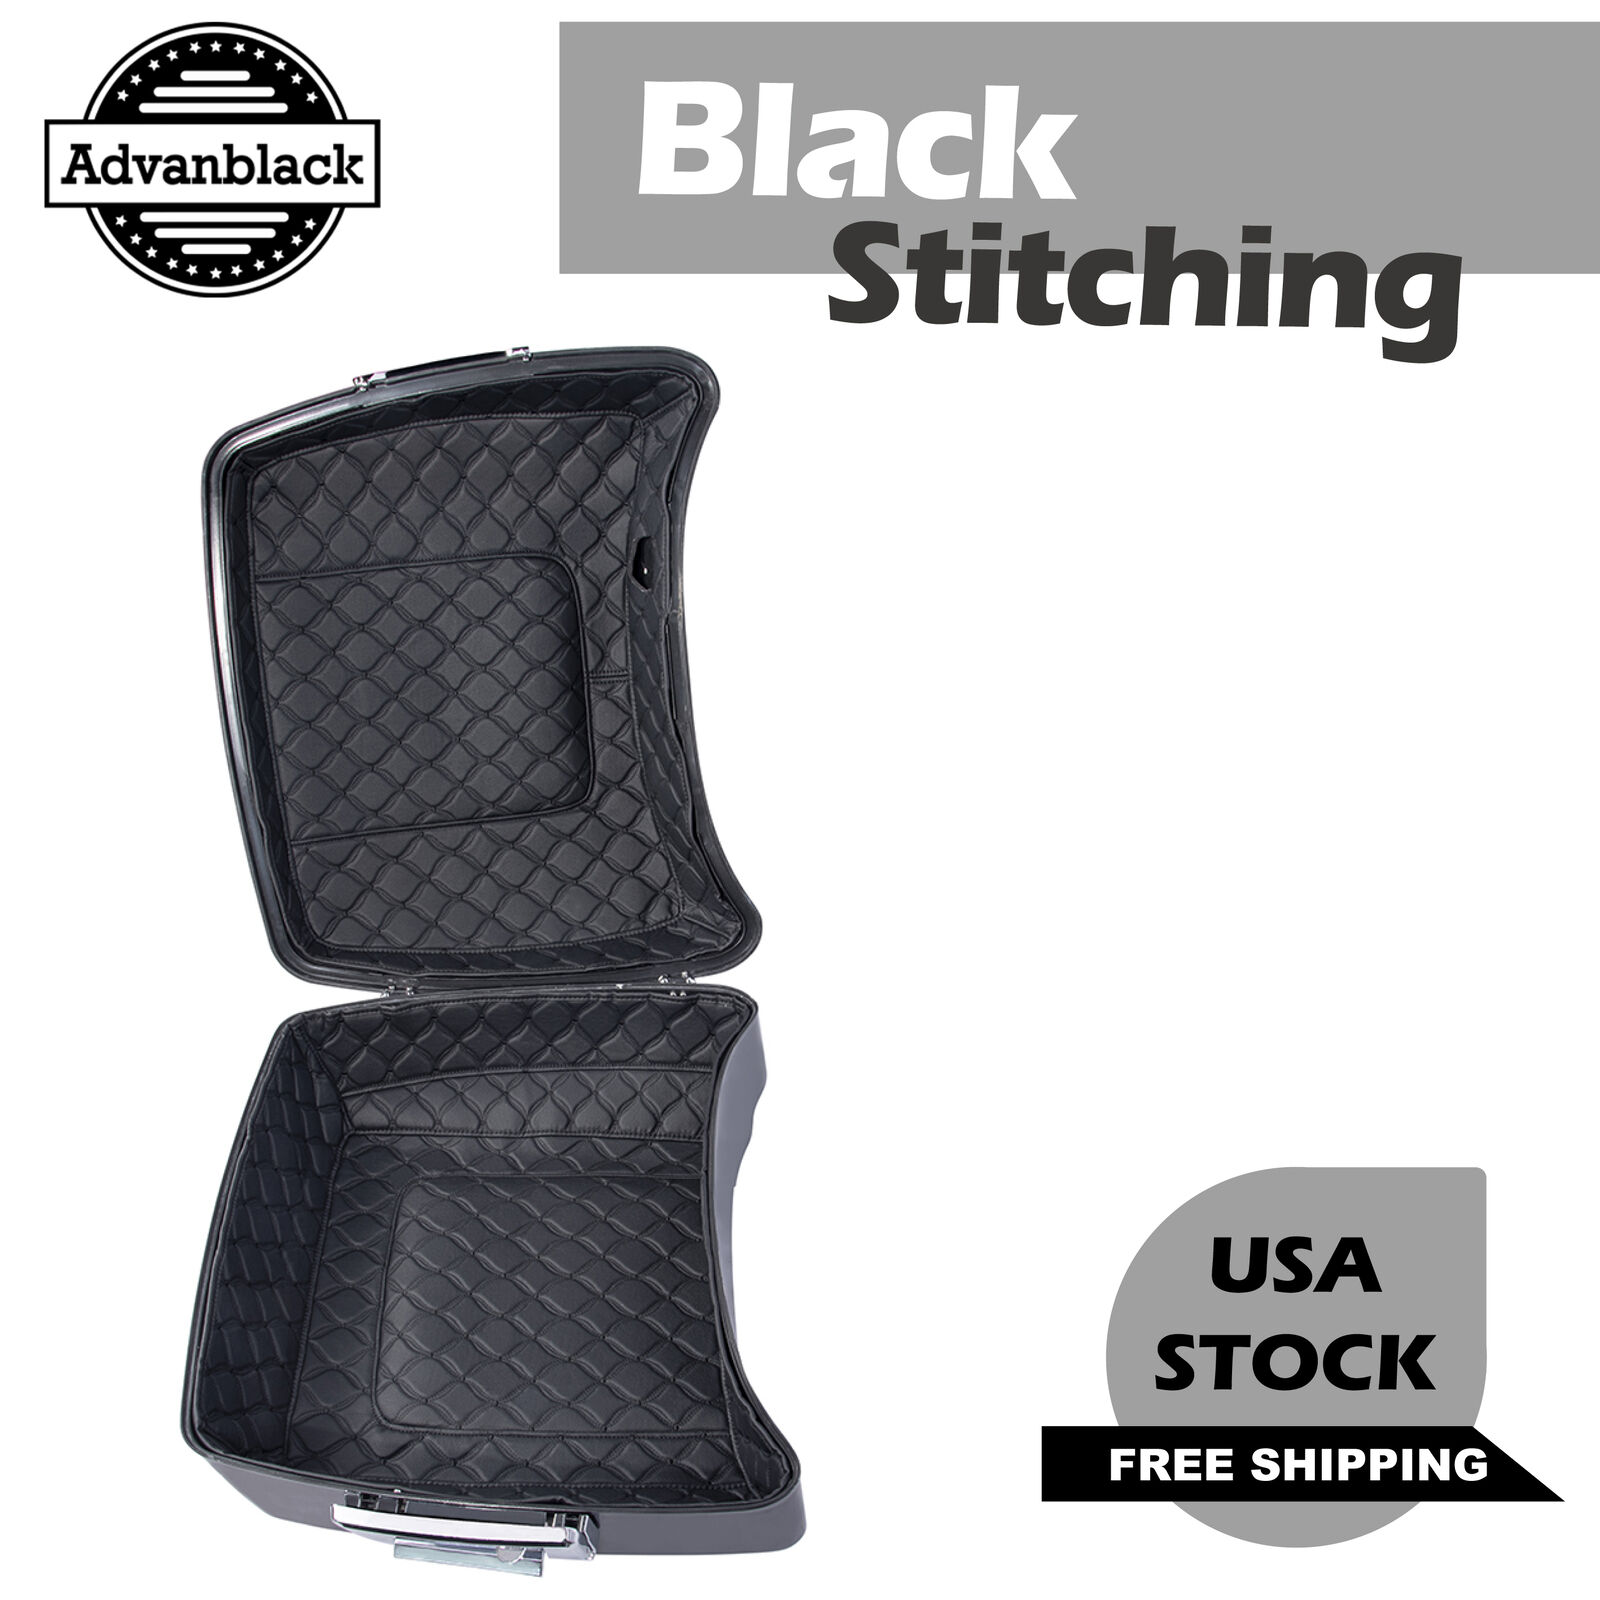 Black Stitching Tour Pack Liner For Advanblack Razor/OEM Harley Chopped Tour Pak